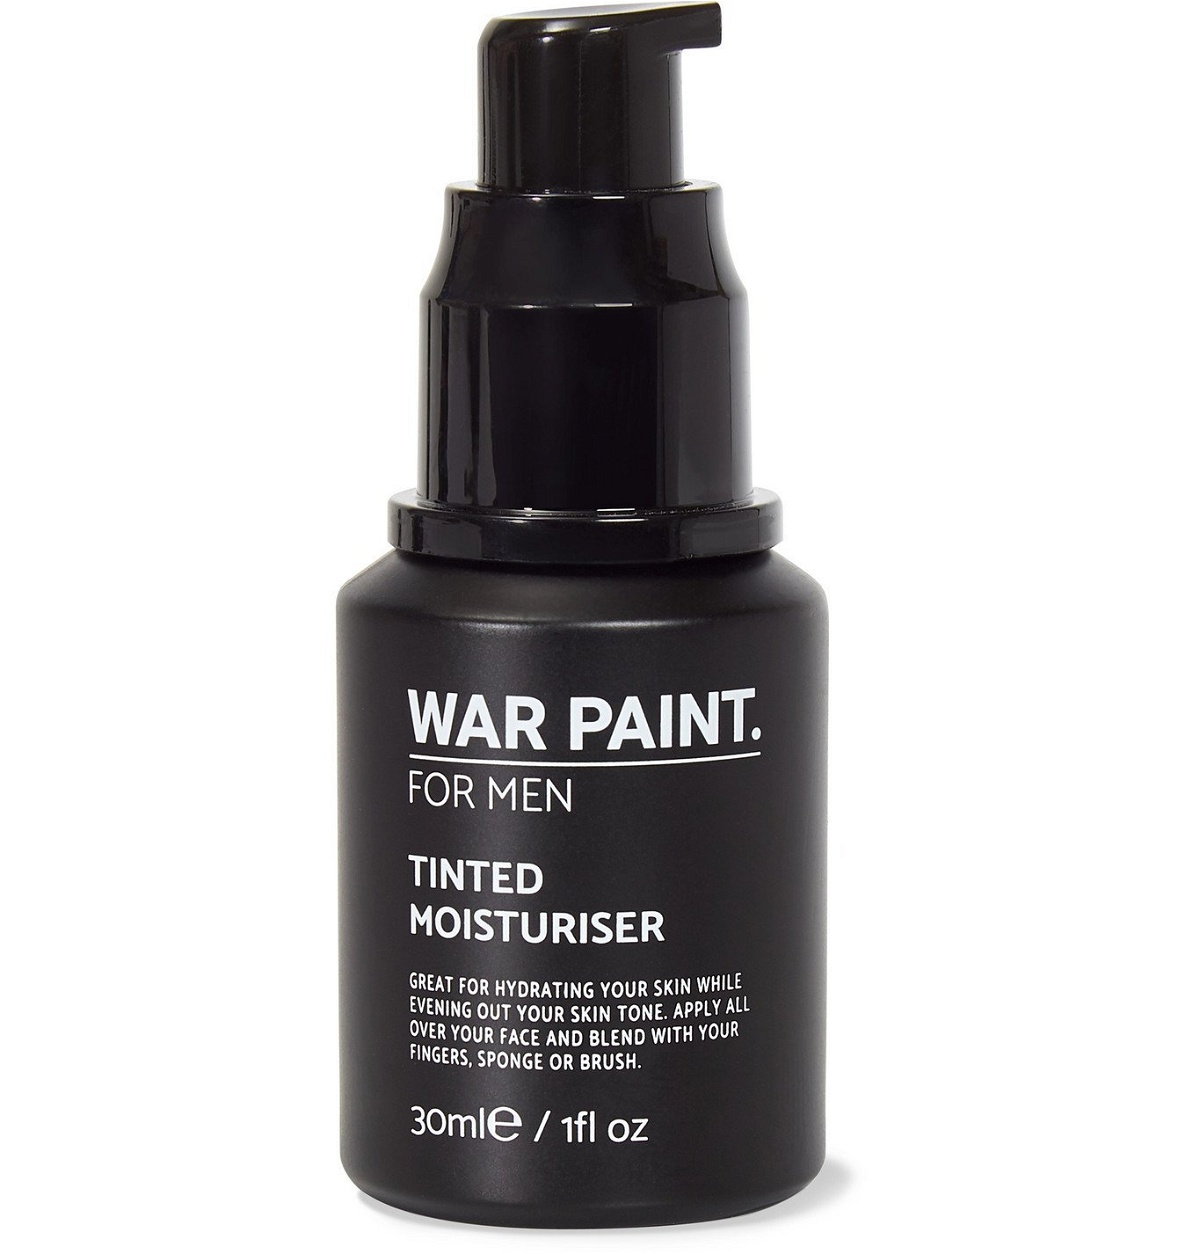 Photo: War Paint for Men - Tinted Moisturiser - Medium, 30ml - Colorless